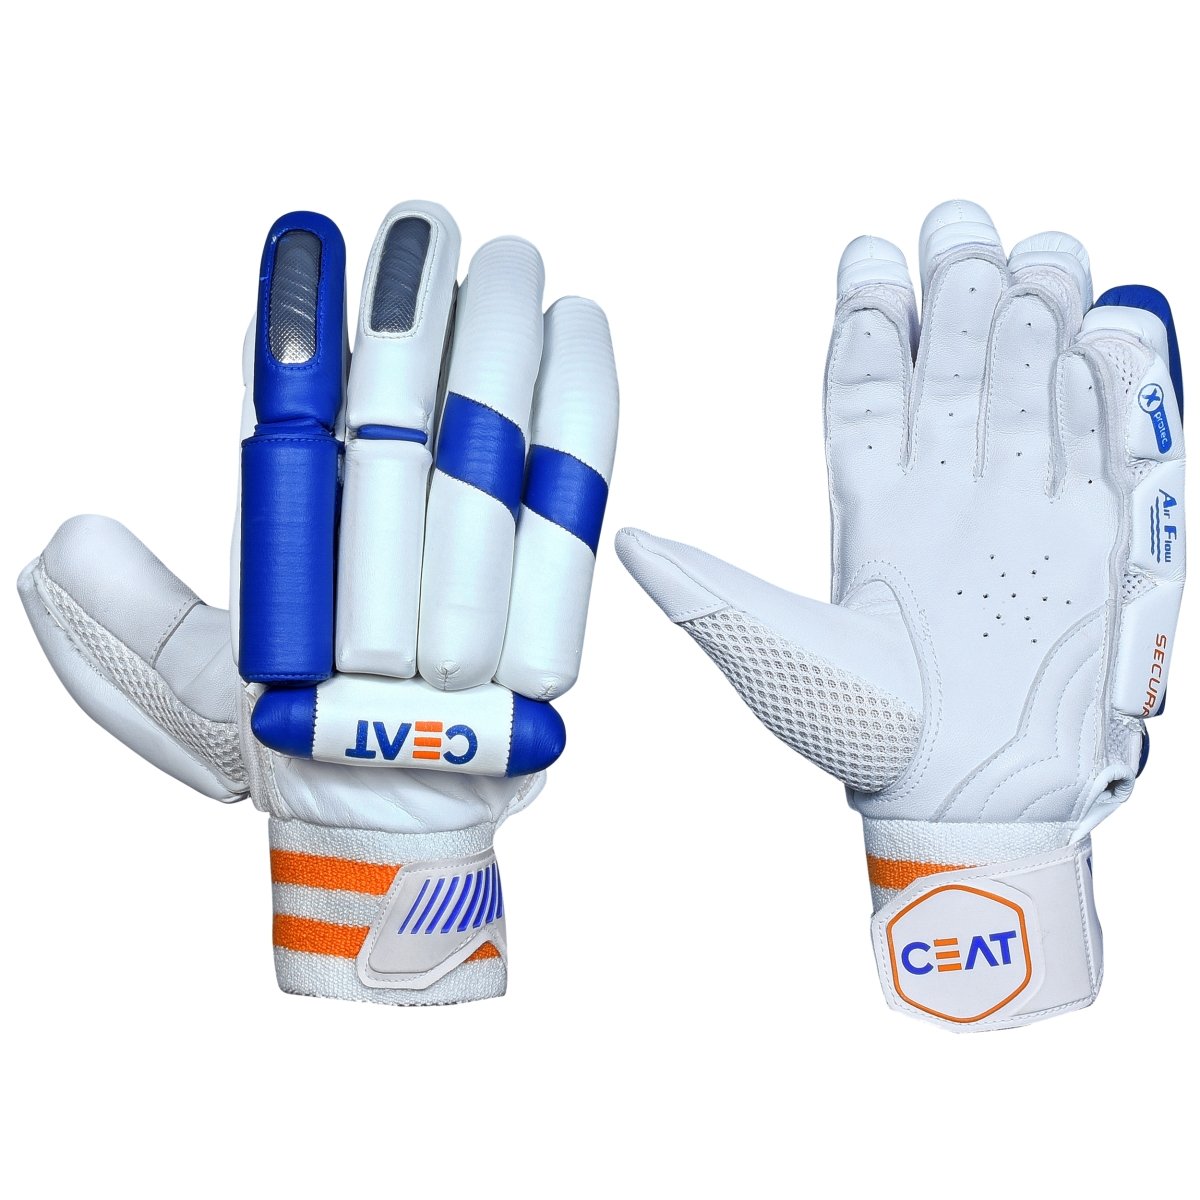 CEAT Secura Cricket Batting Gloves.